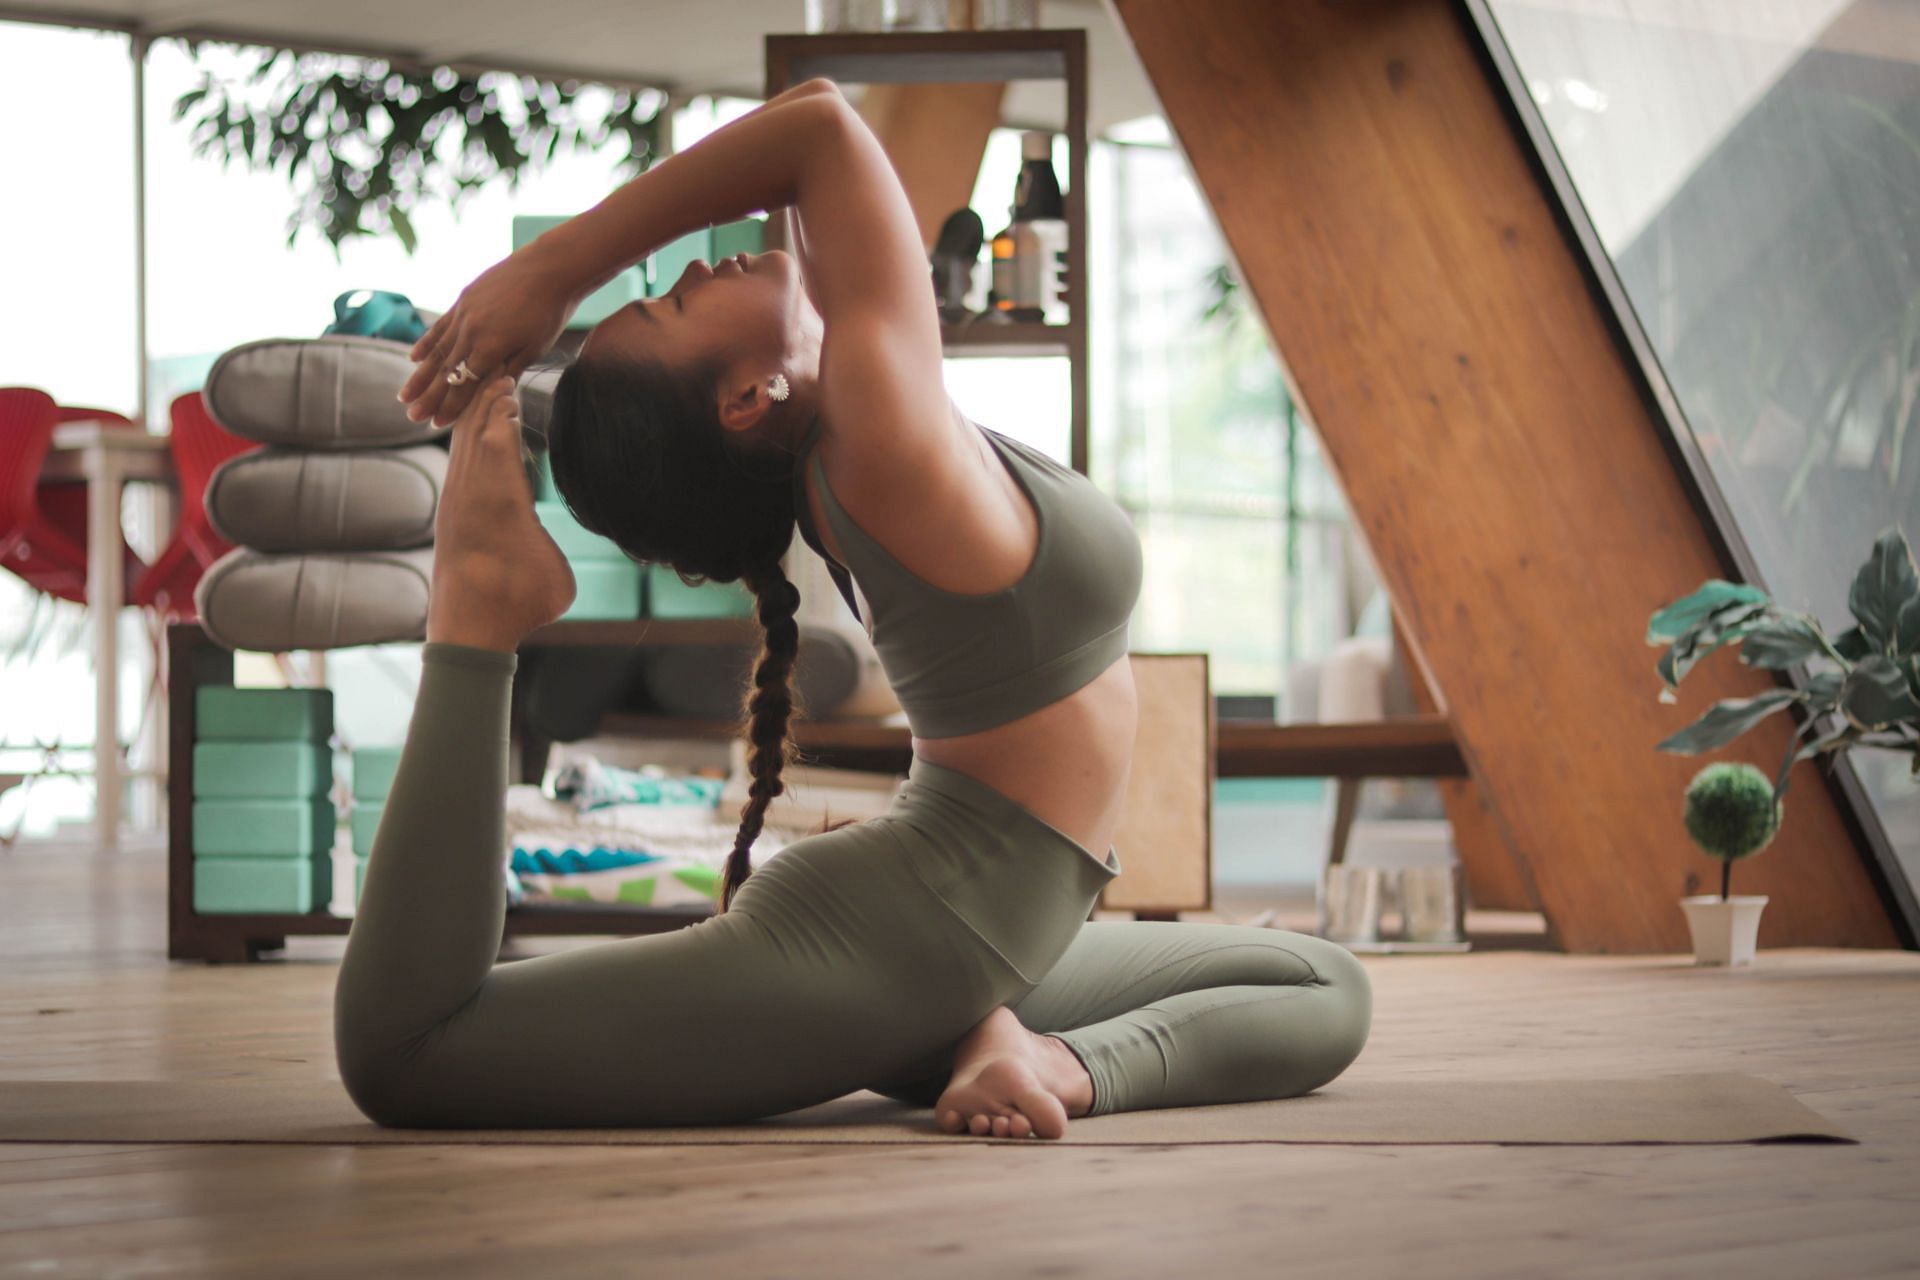 Yoga for better stability and flexibility. (Image via Unsplash/Carl Barcelo)